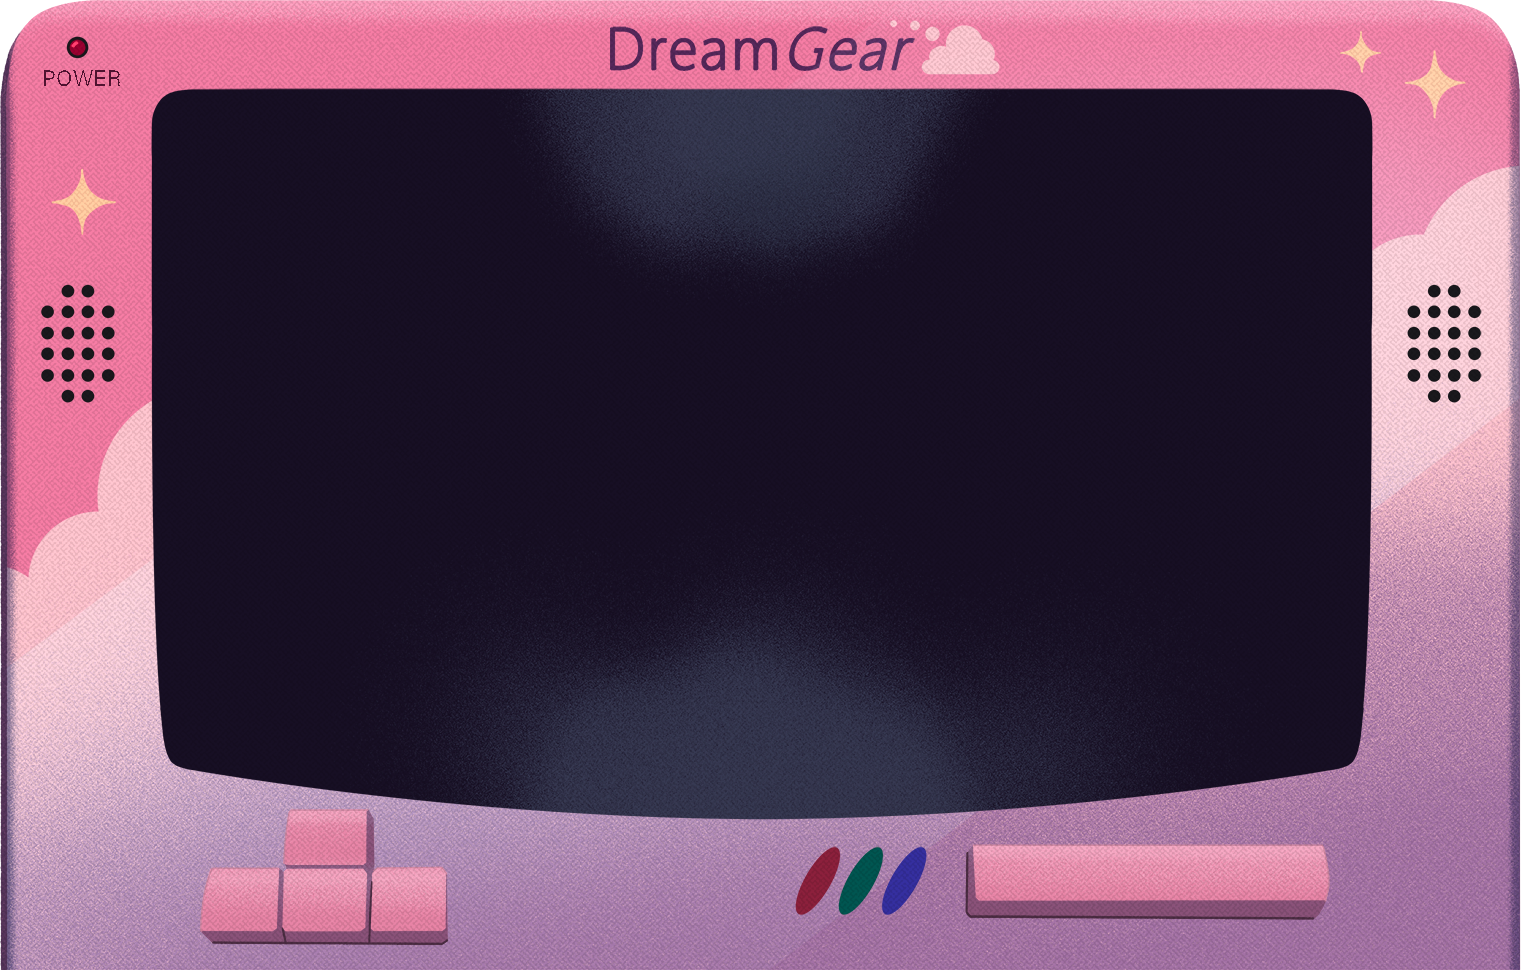 DreamGear